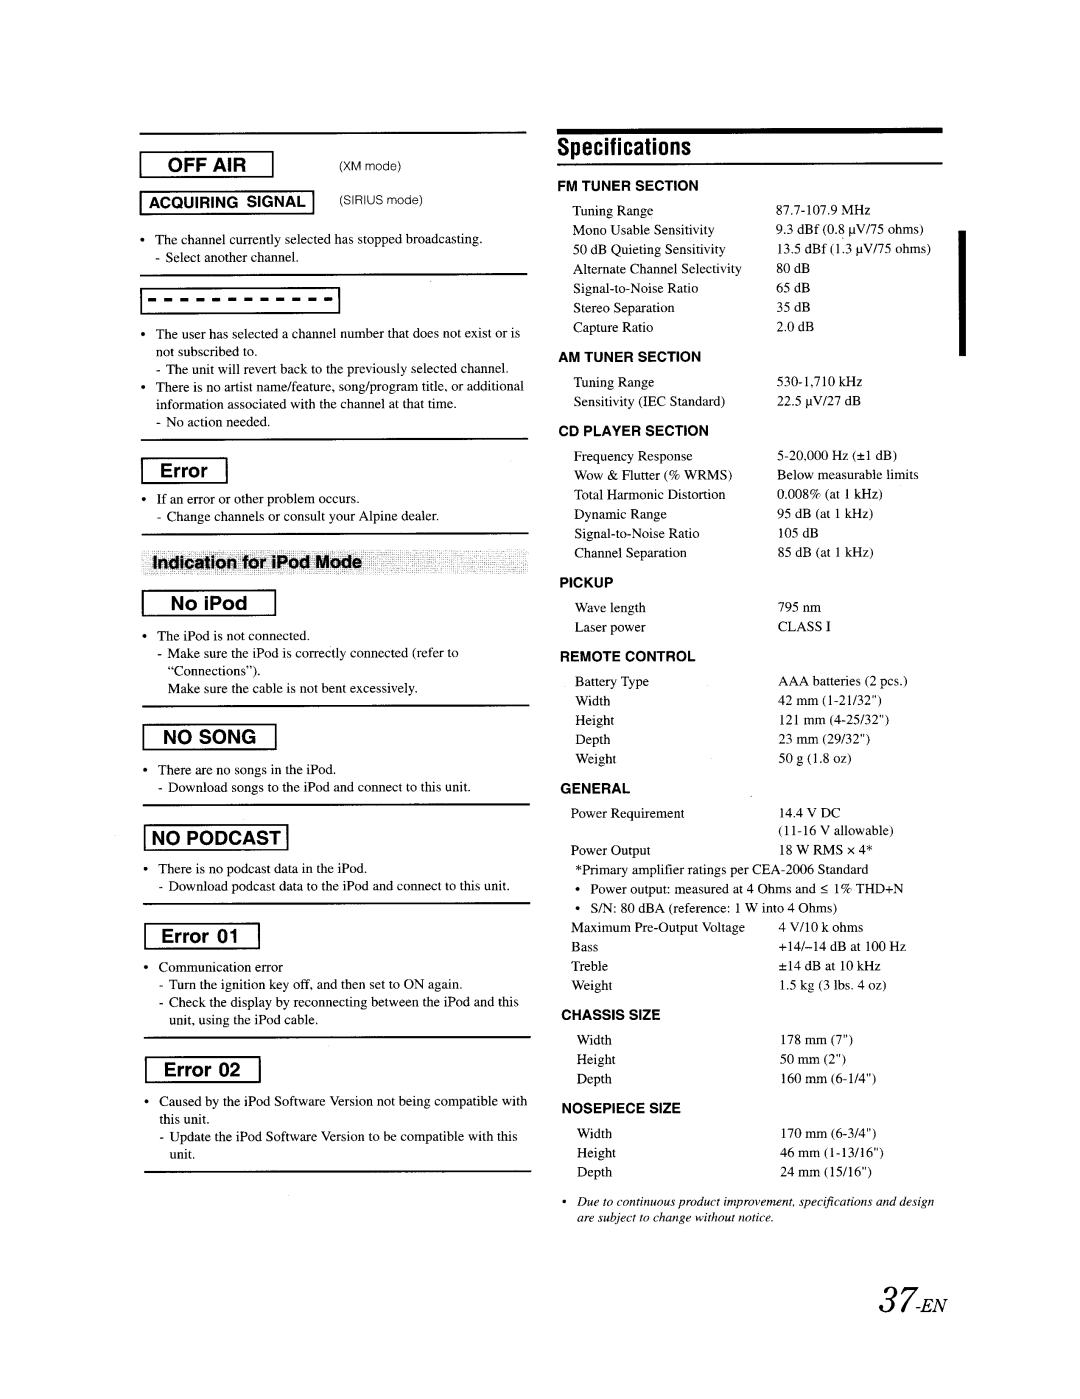 Alpine CDA-9887 owner manual 37-EN, Specifications 